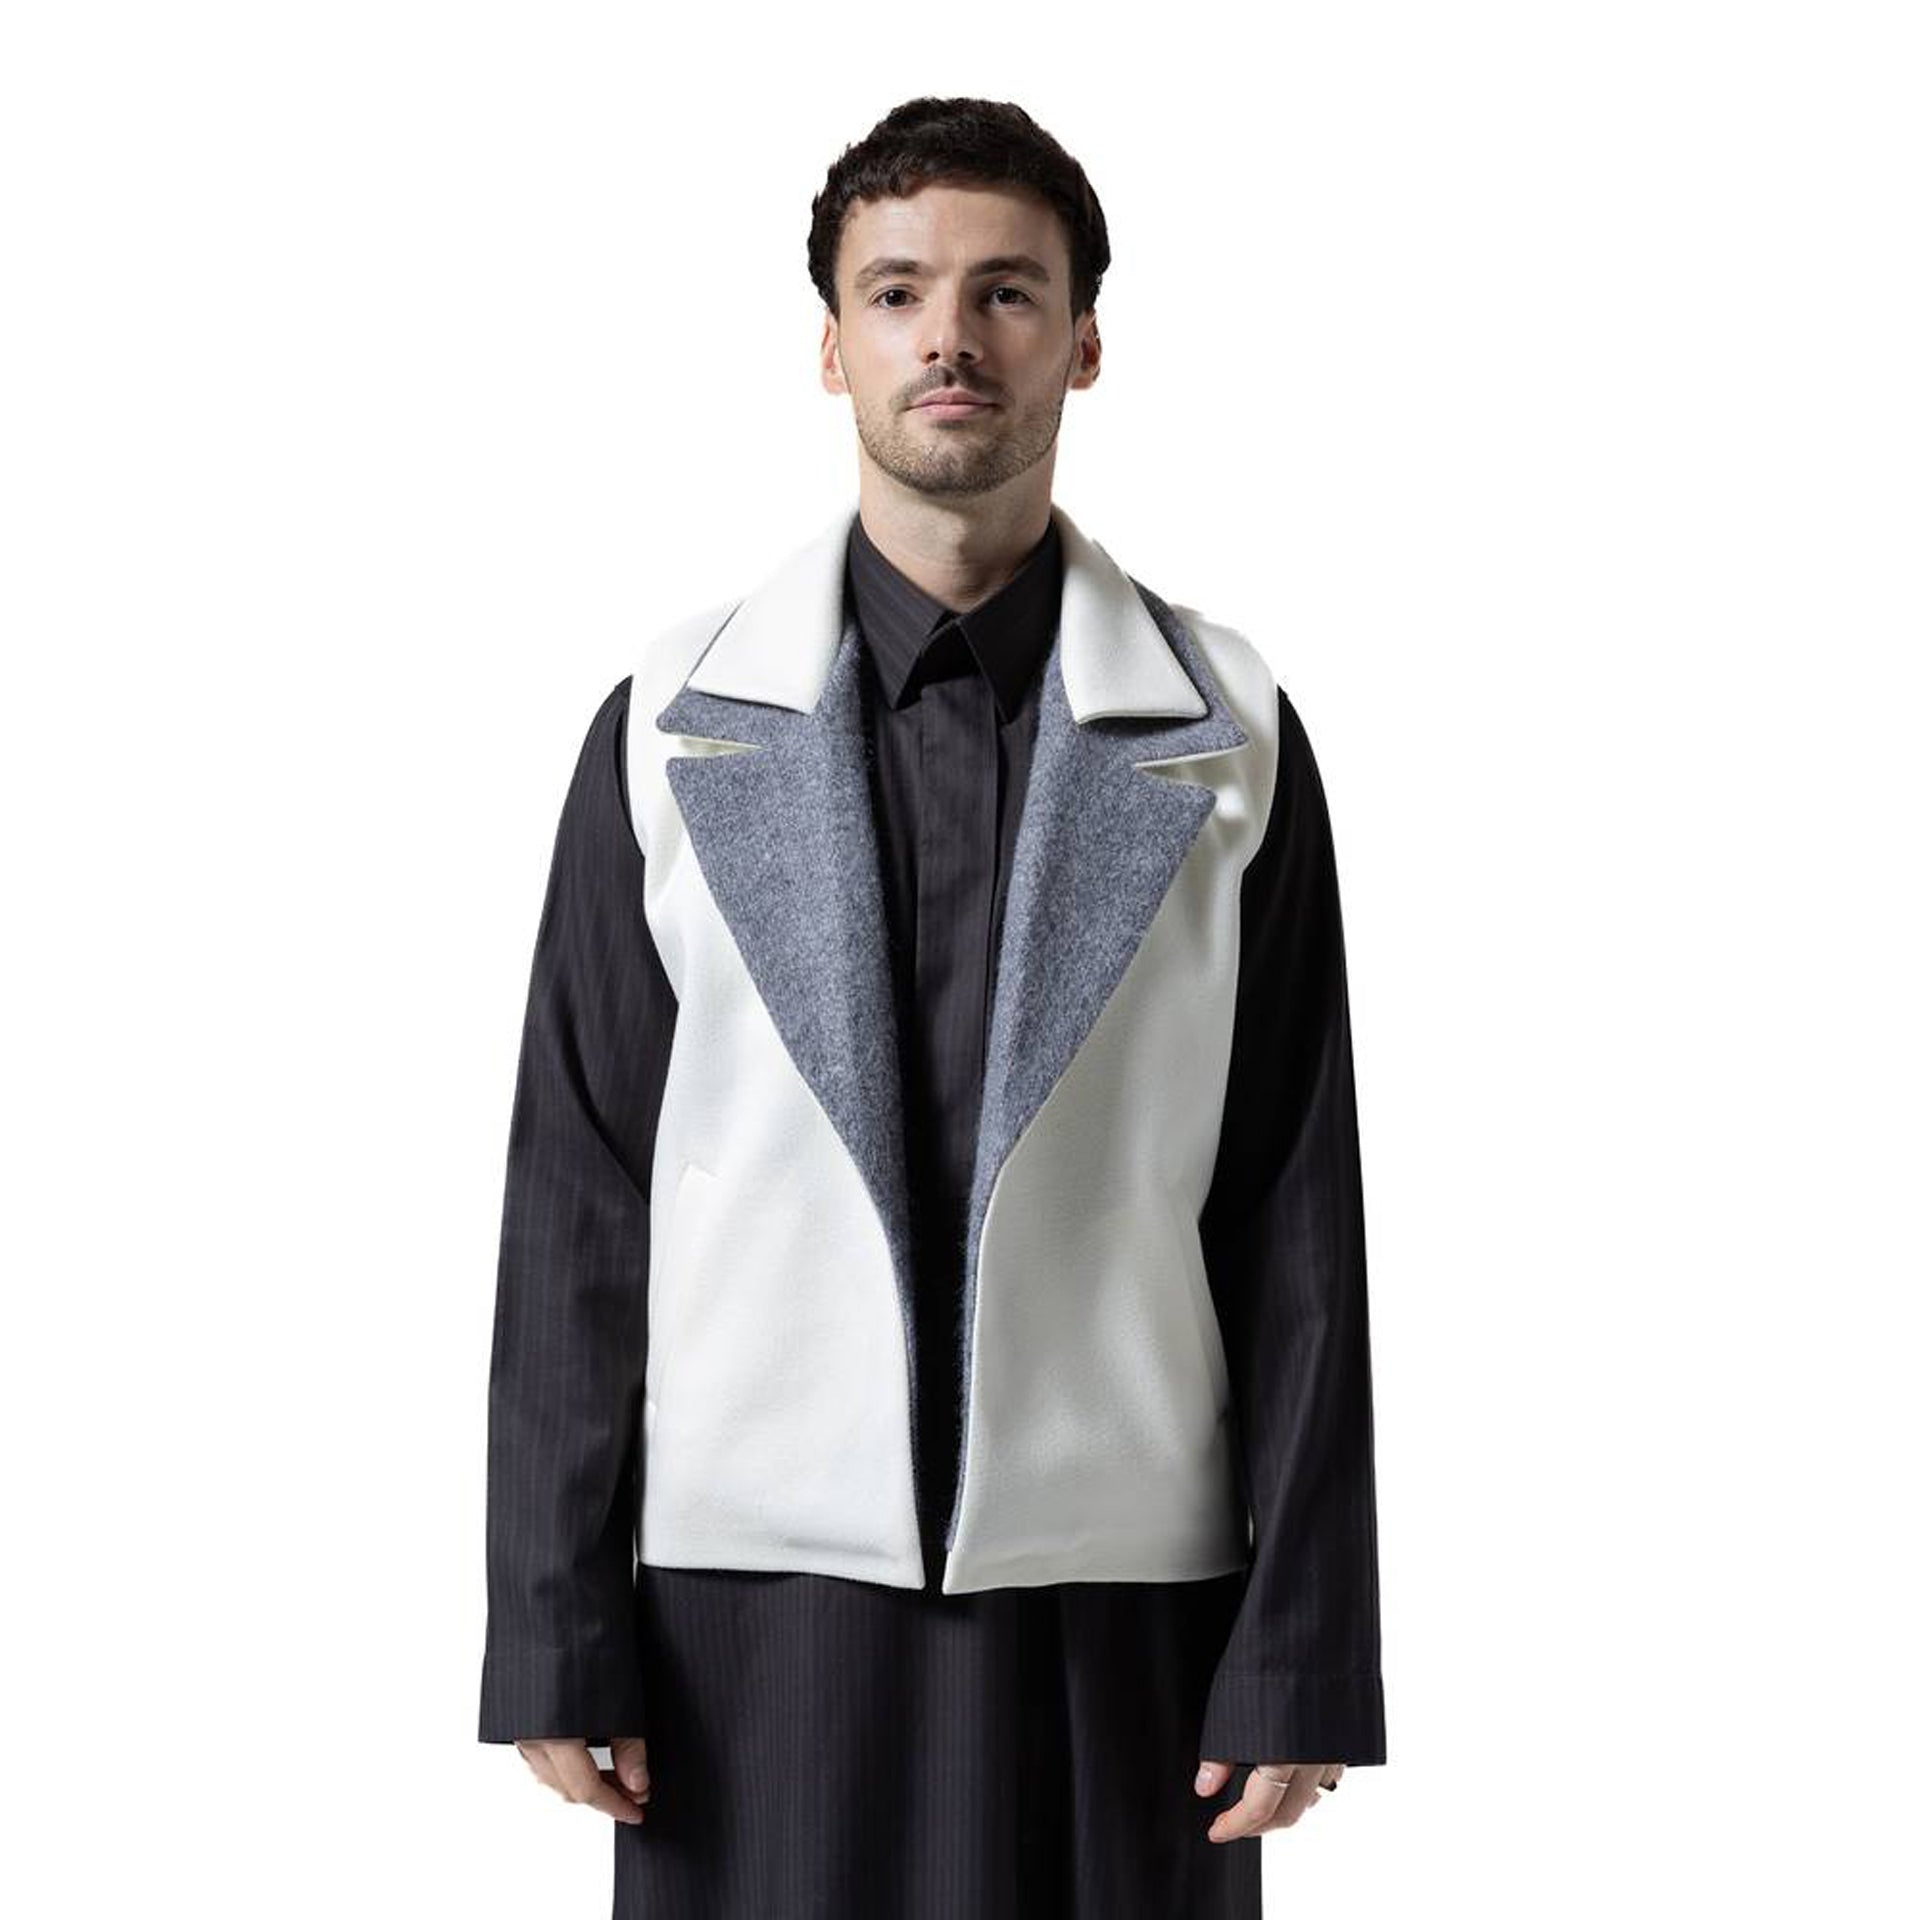 White & Gray Double Collar Vest From Hajruss